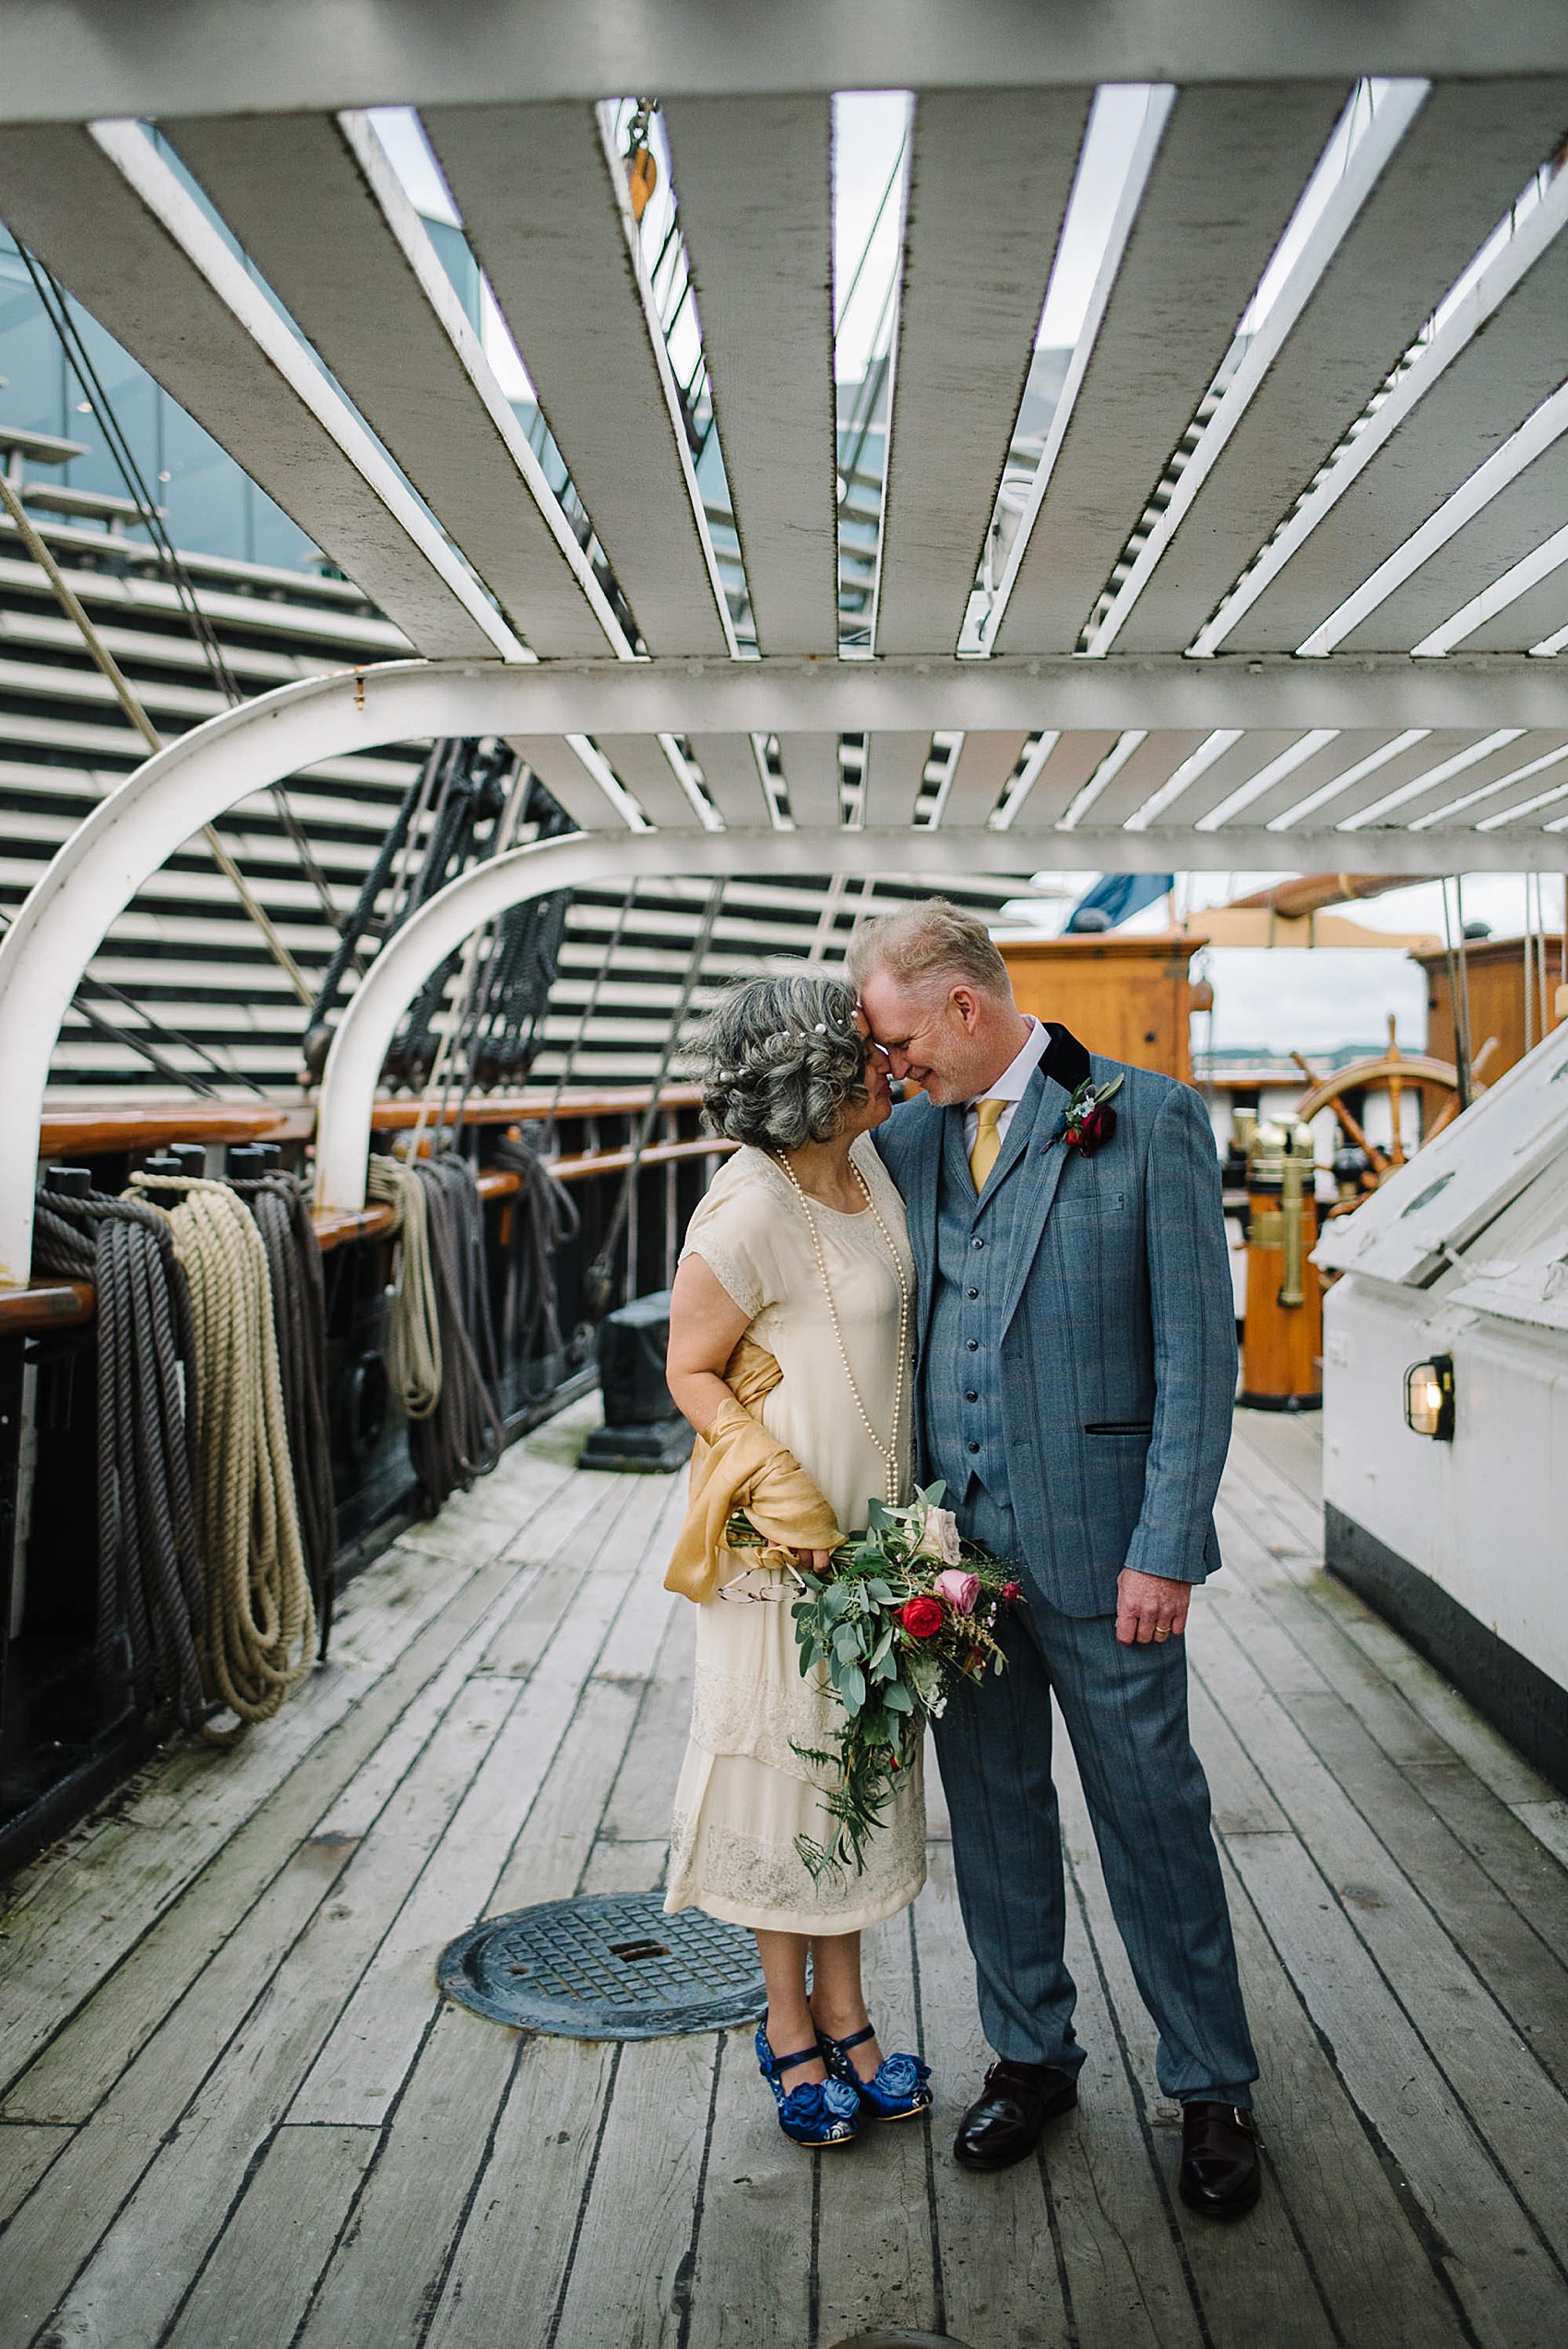 Wedding on a boat 1920s vintage dress 43